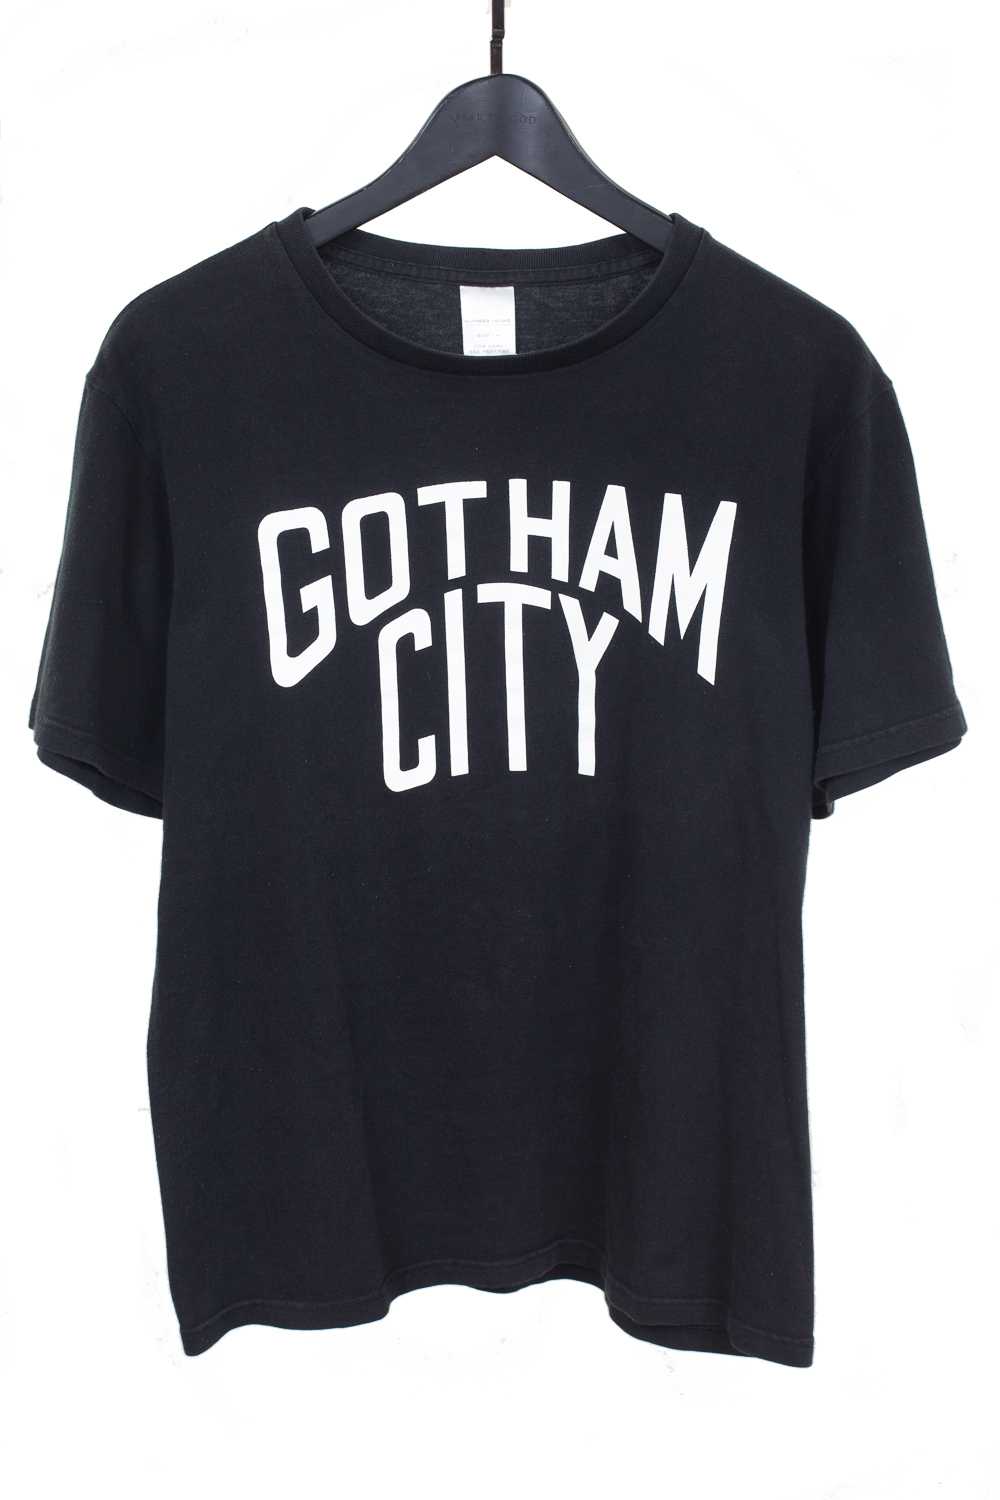 SS02 OG “Gotham City” - image 1